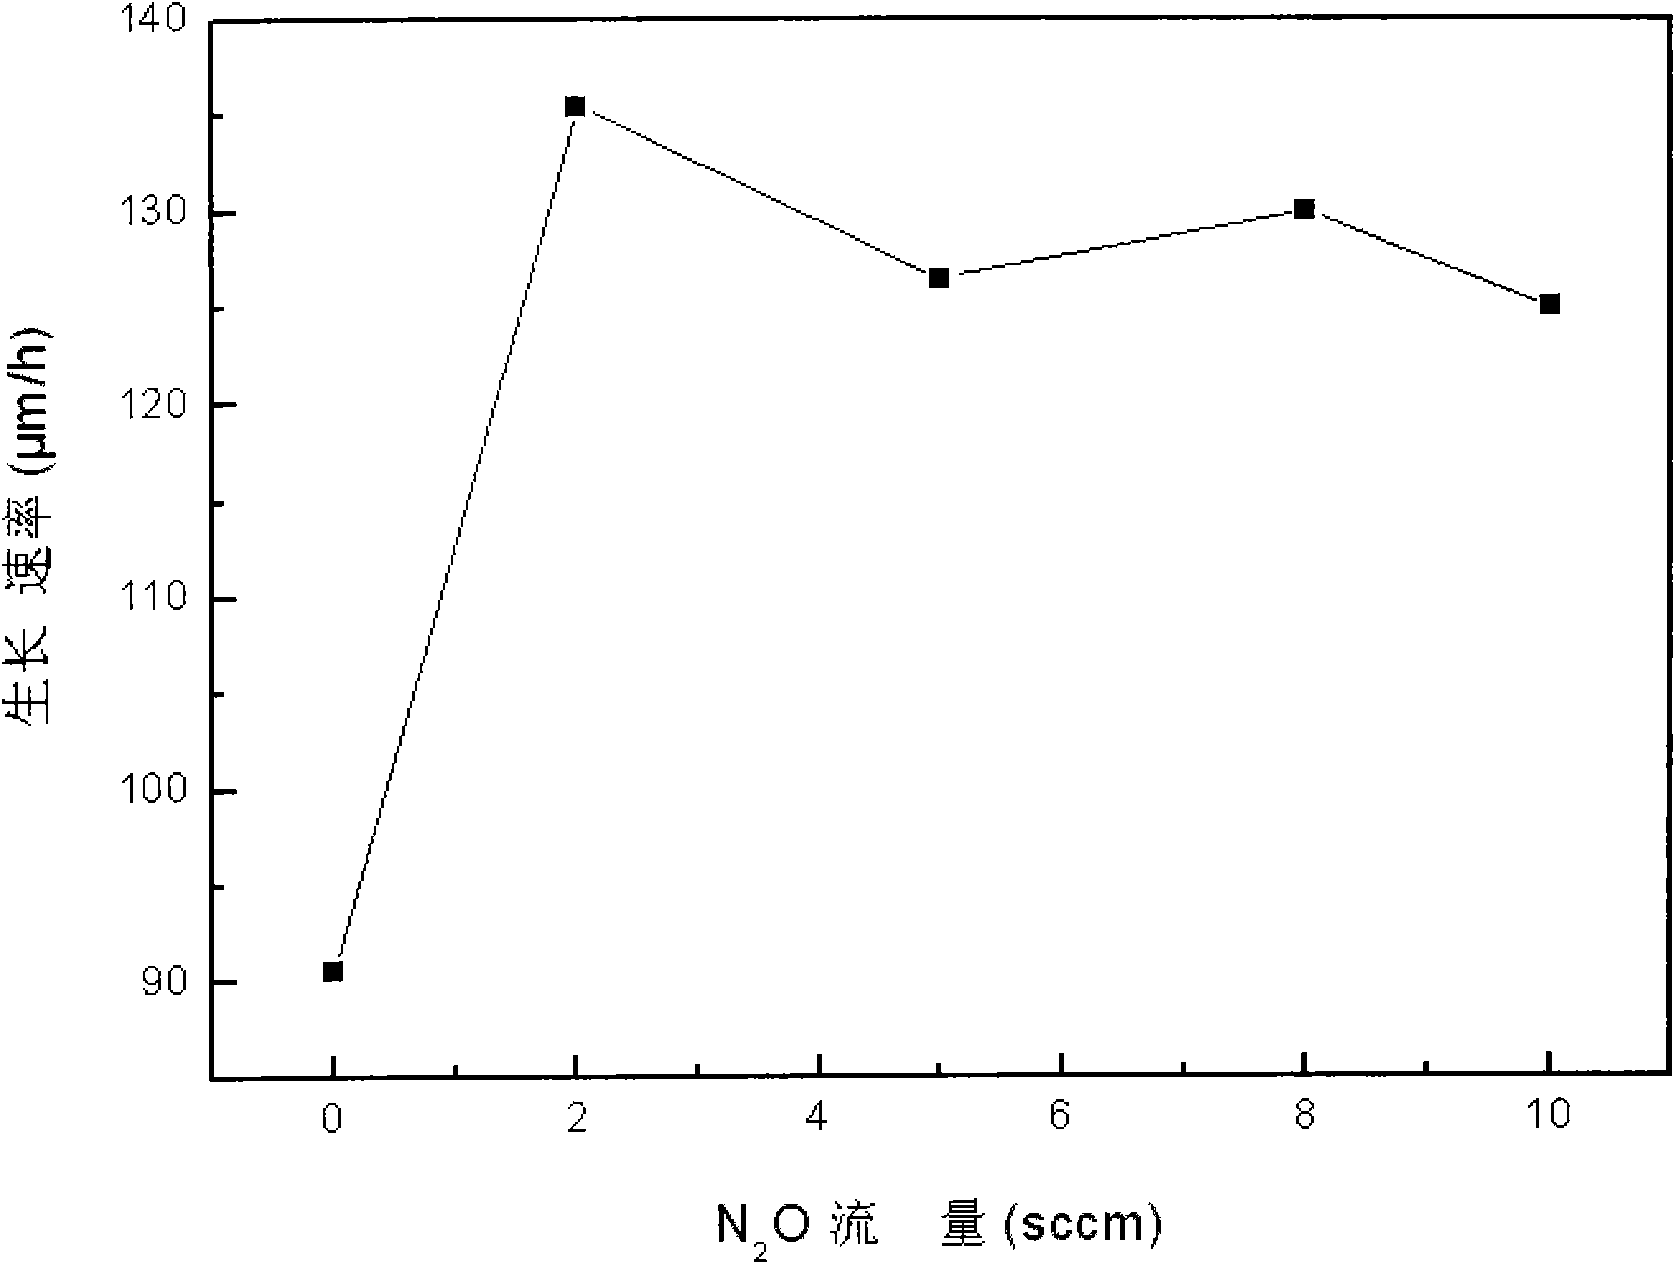 Chemical vapor deposition method for preparing diamond single crystal by adding N2O gas